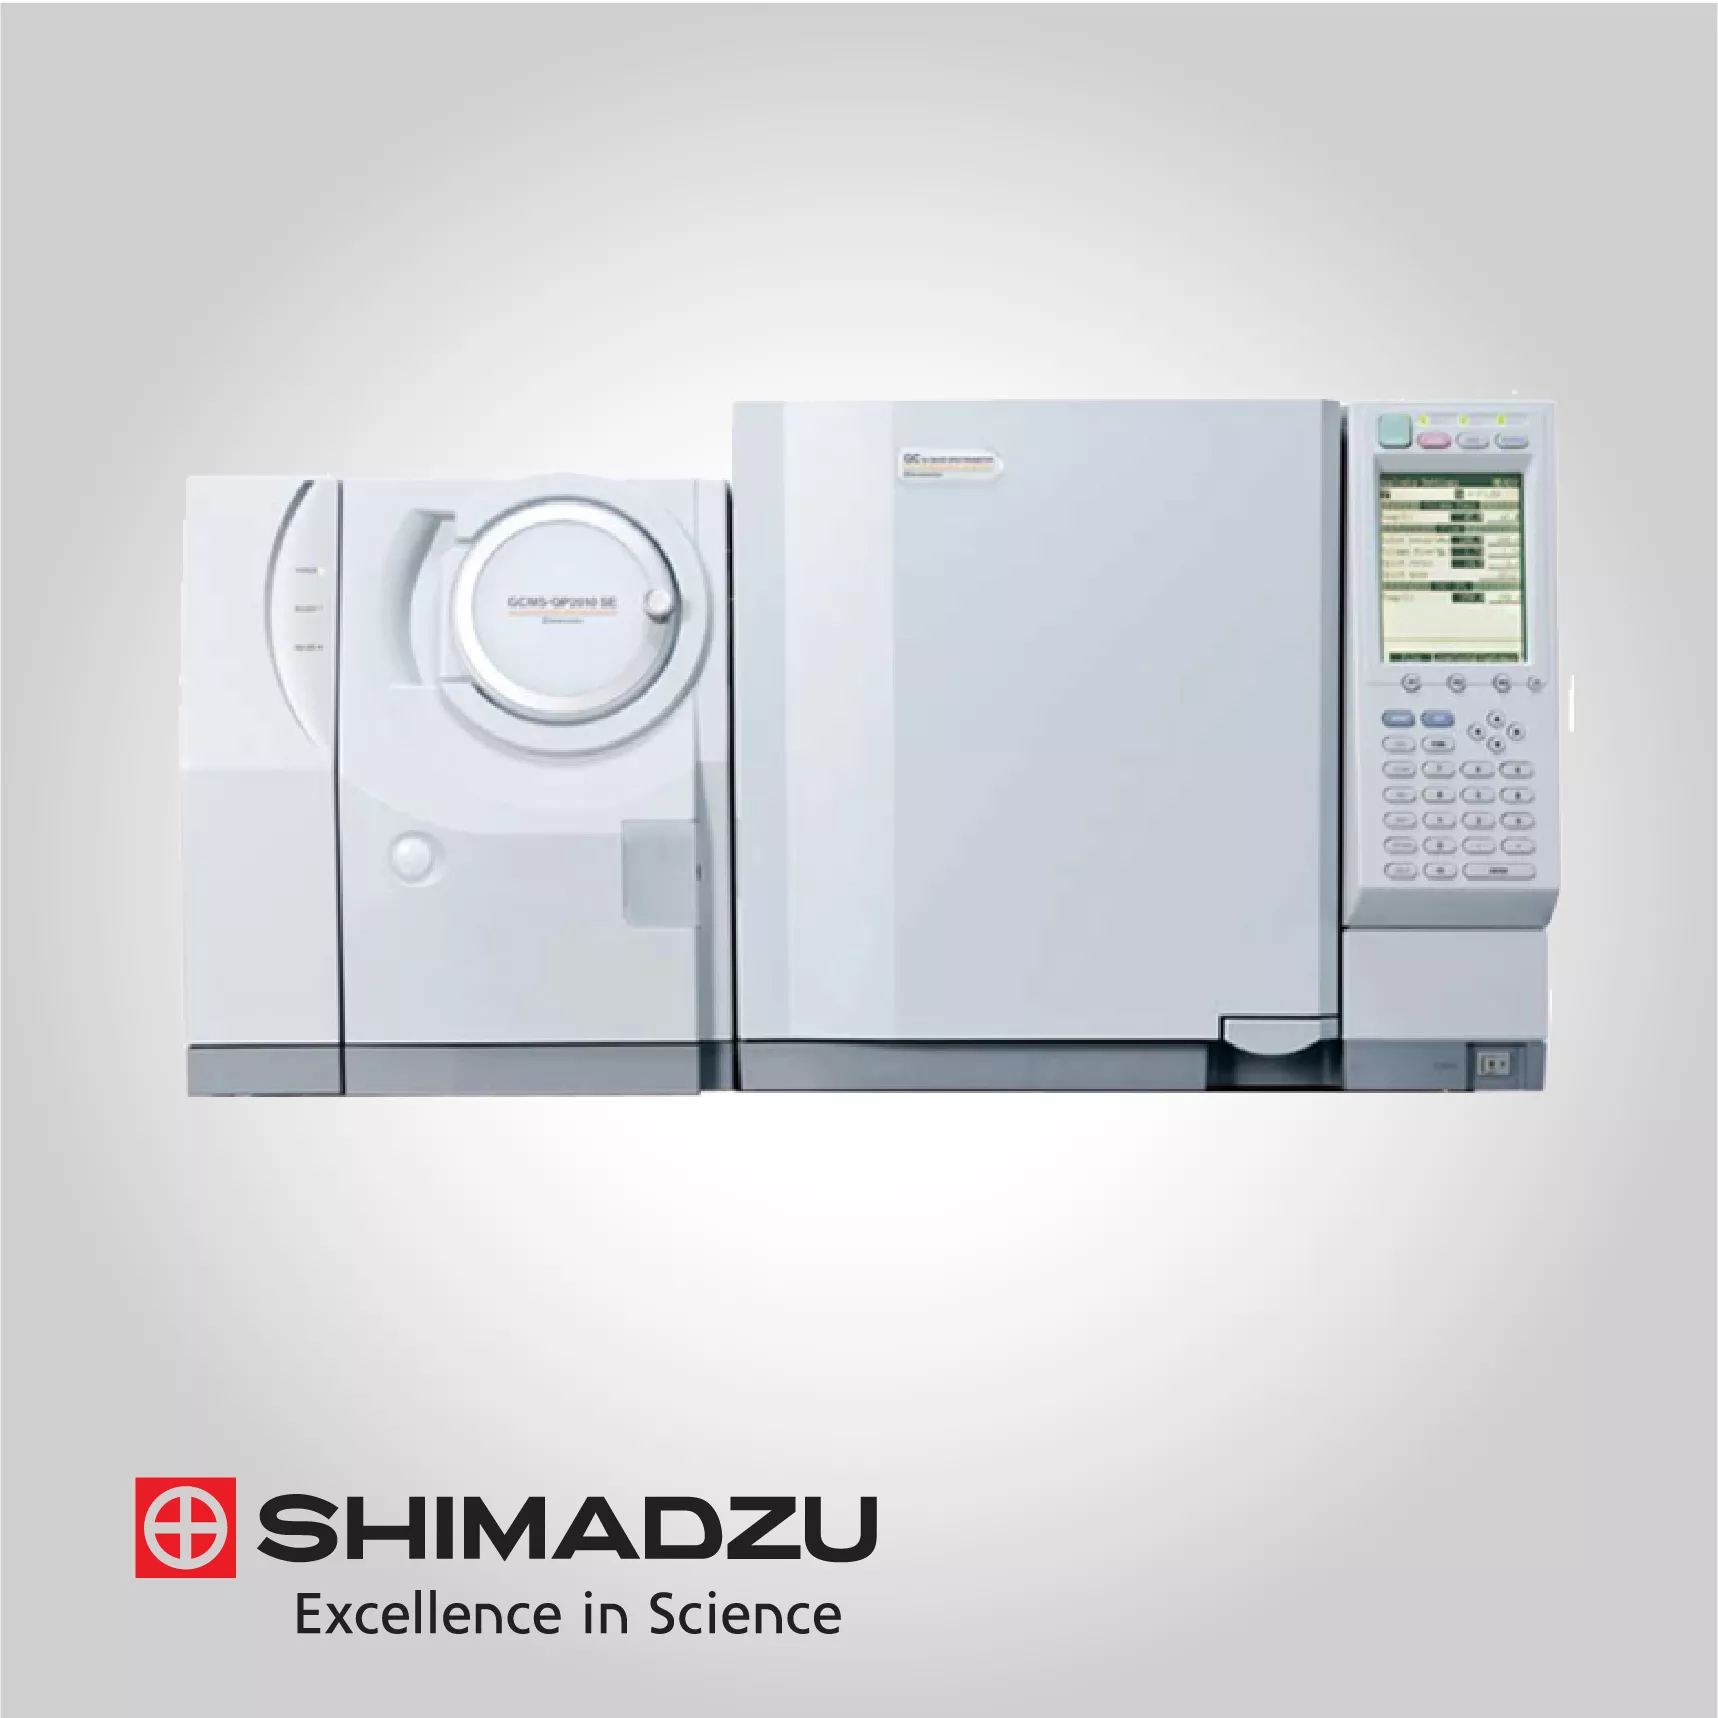 Shimdazu GCMS-QP2010 SE